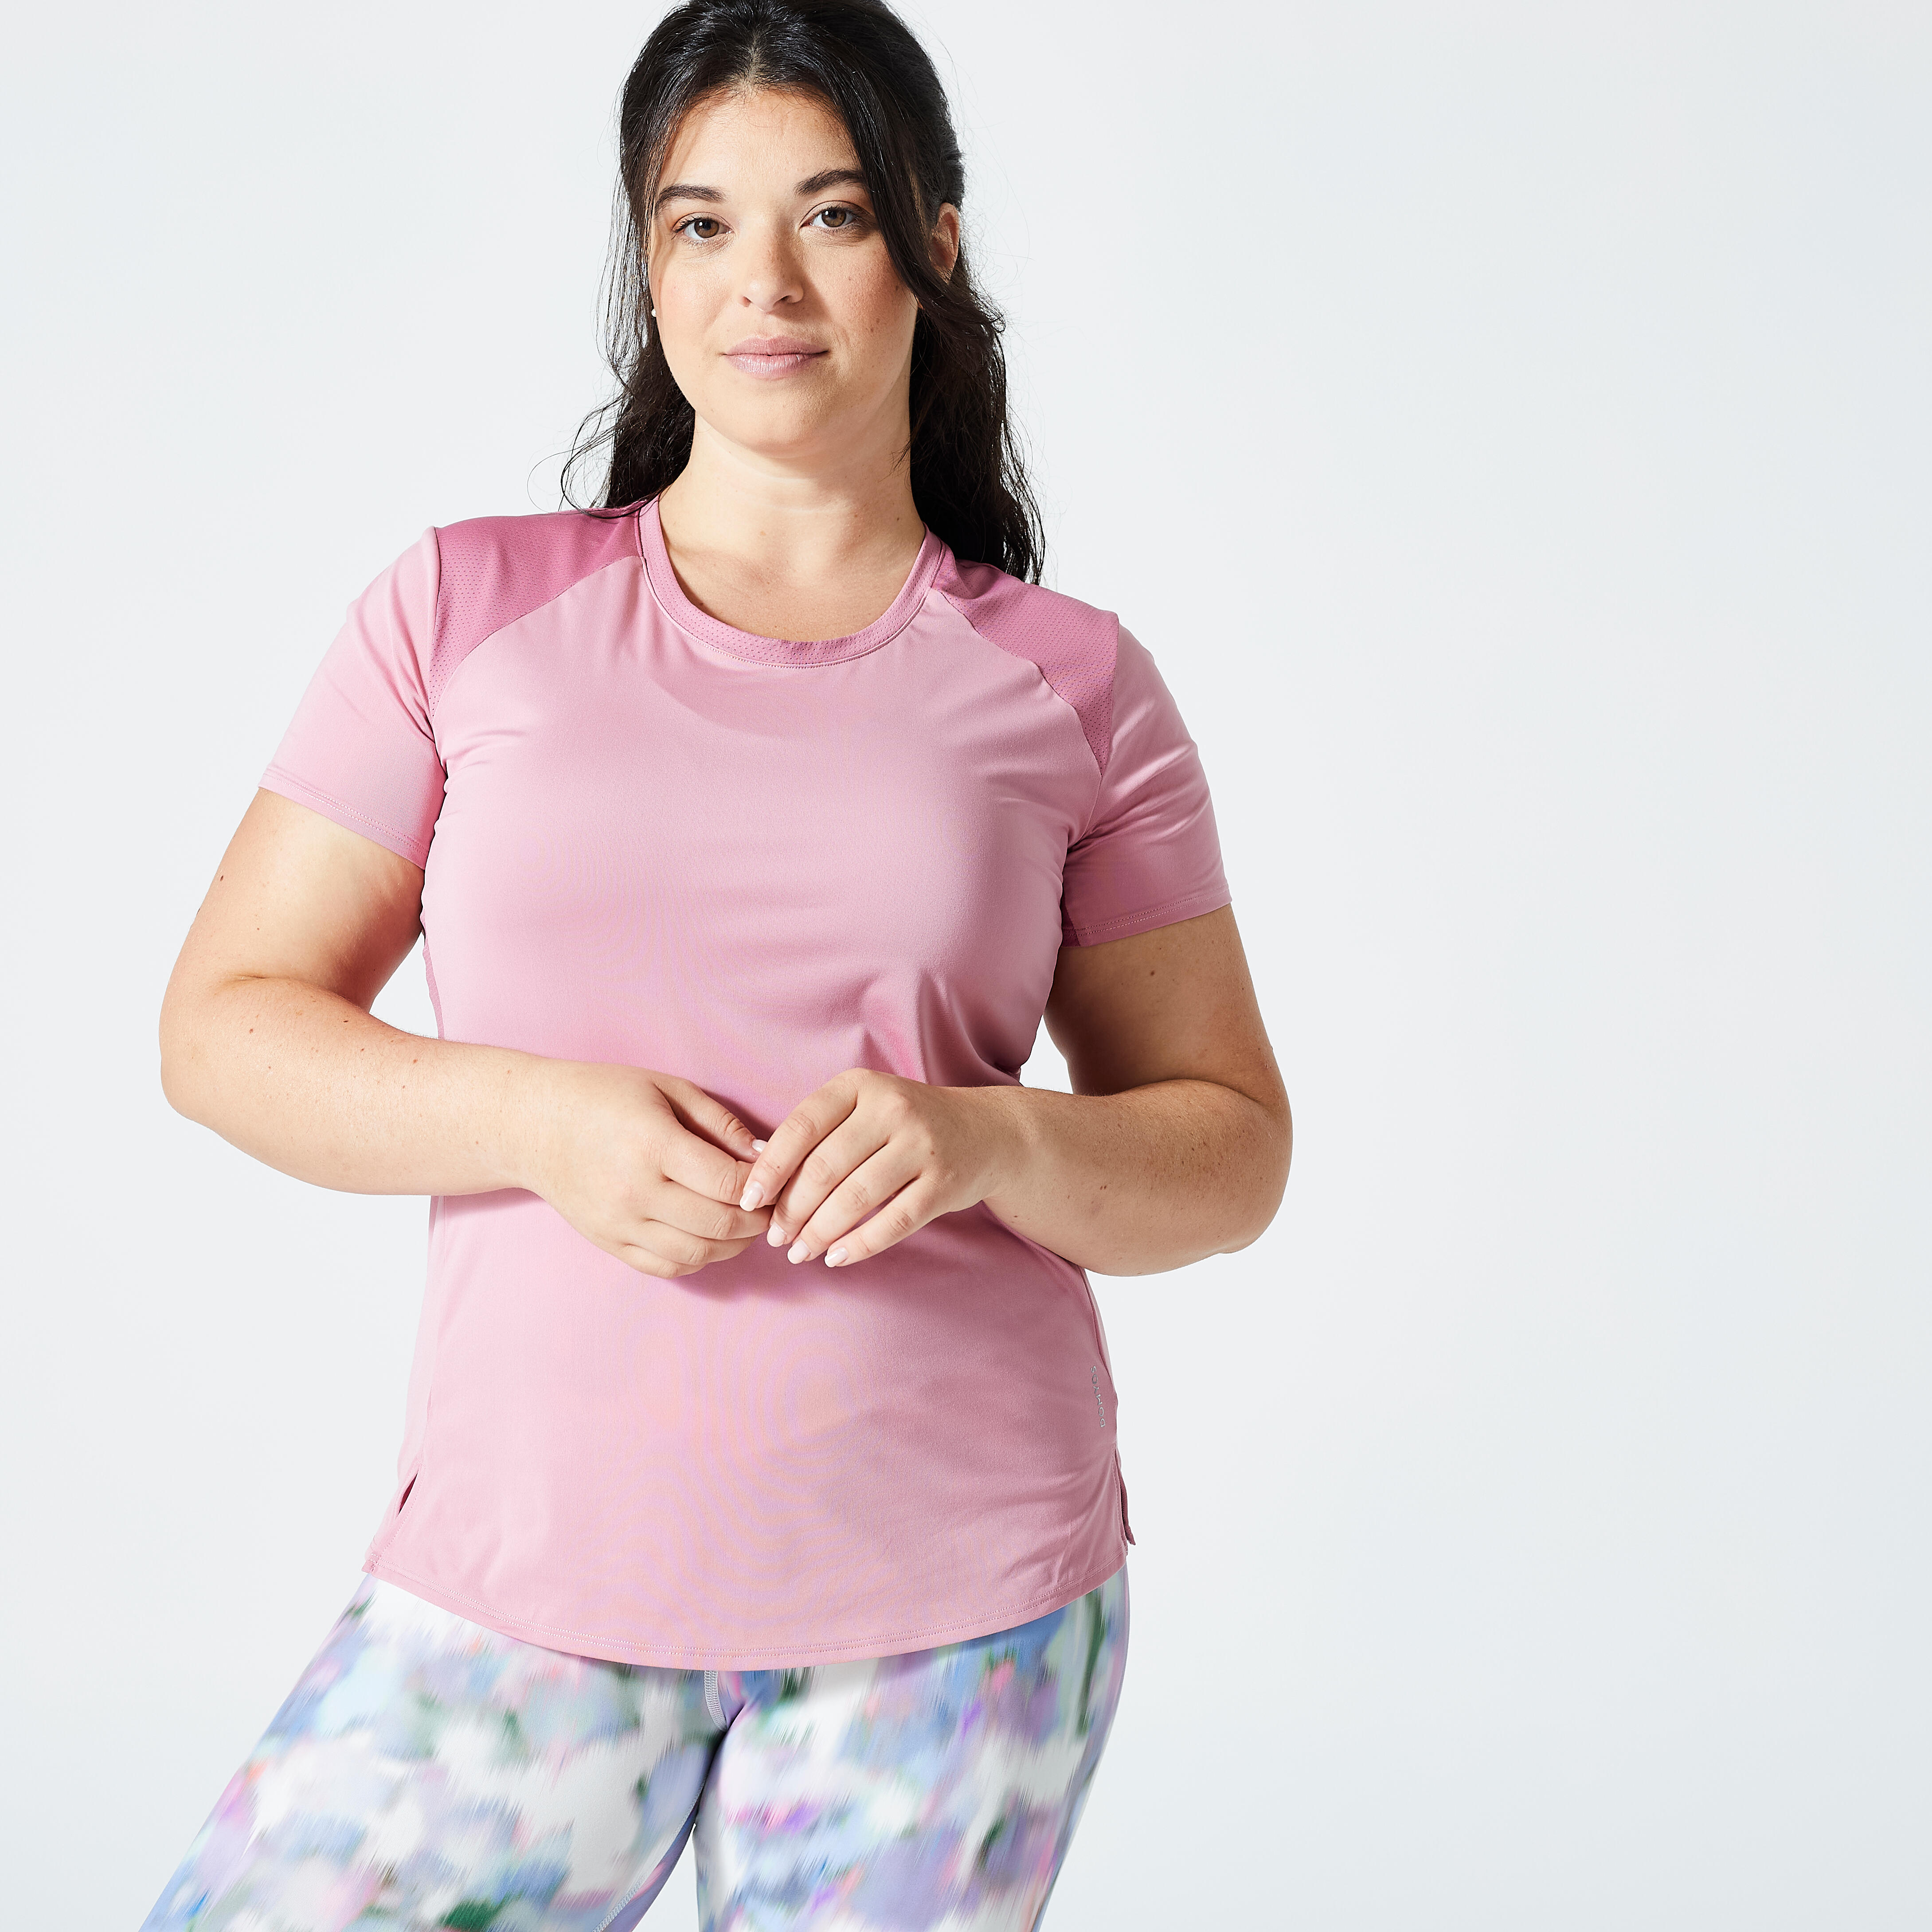 Women's Fitness T-Shirt - FTS 120 Pink - Light rose - Domyos - Decathlon